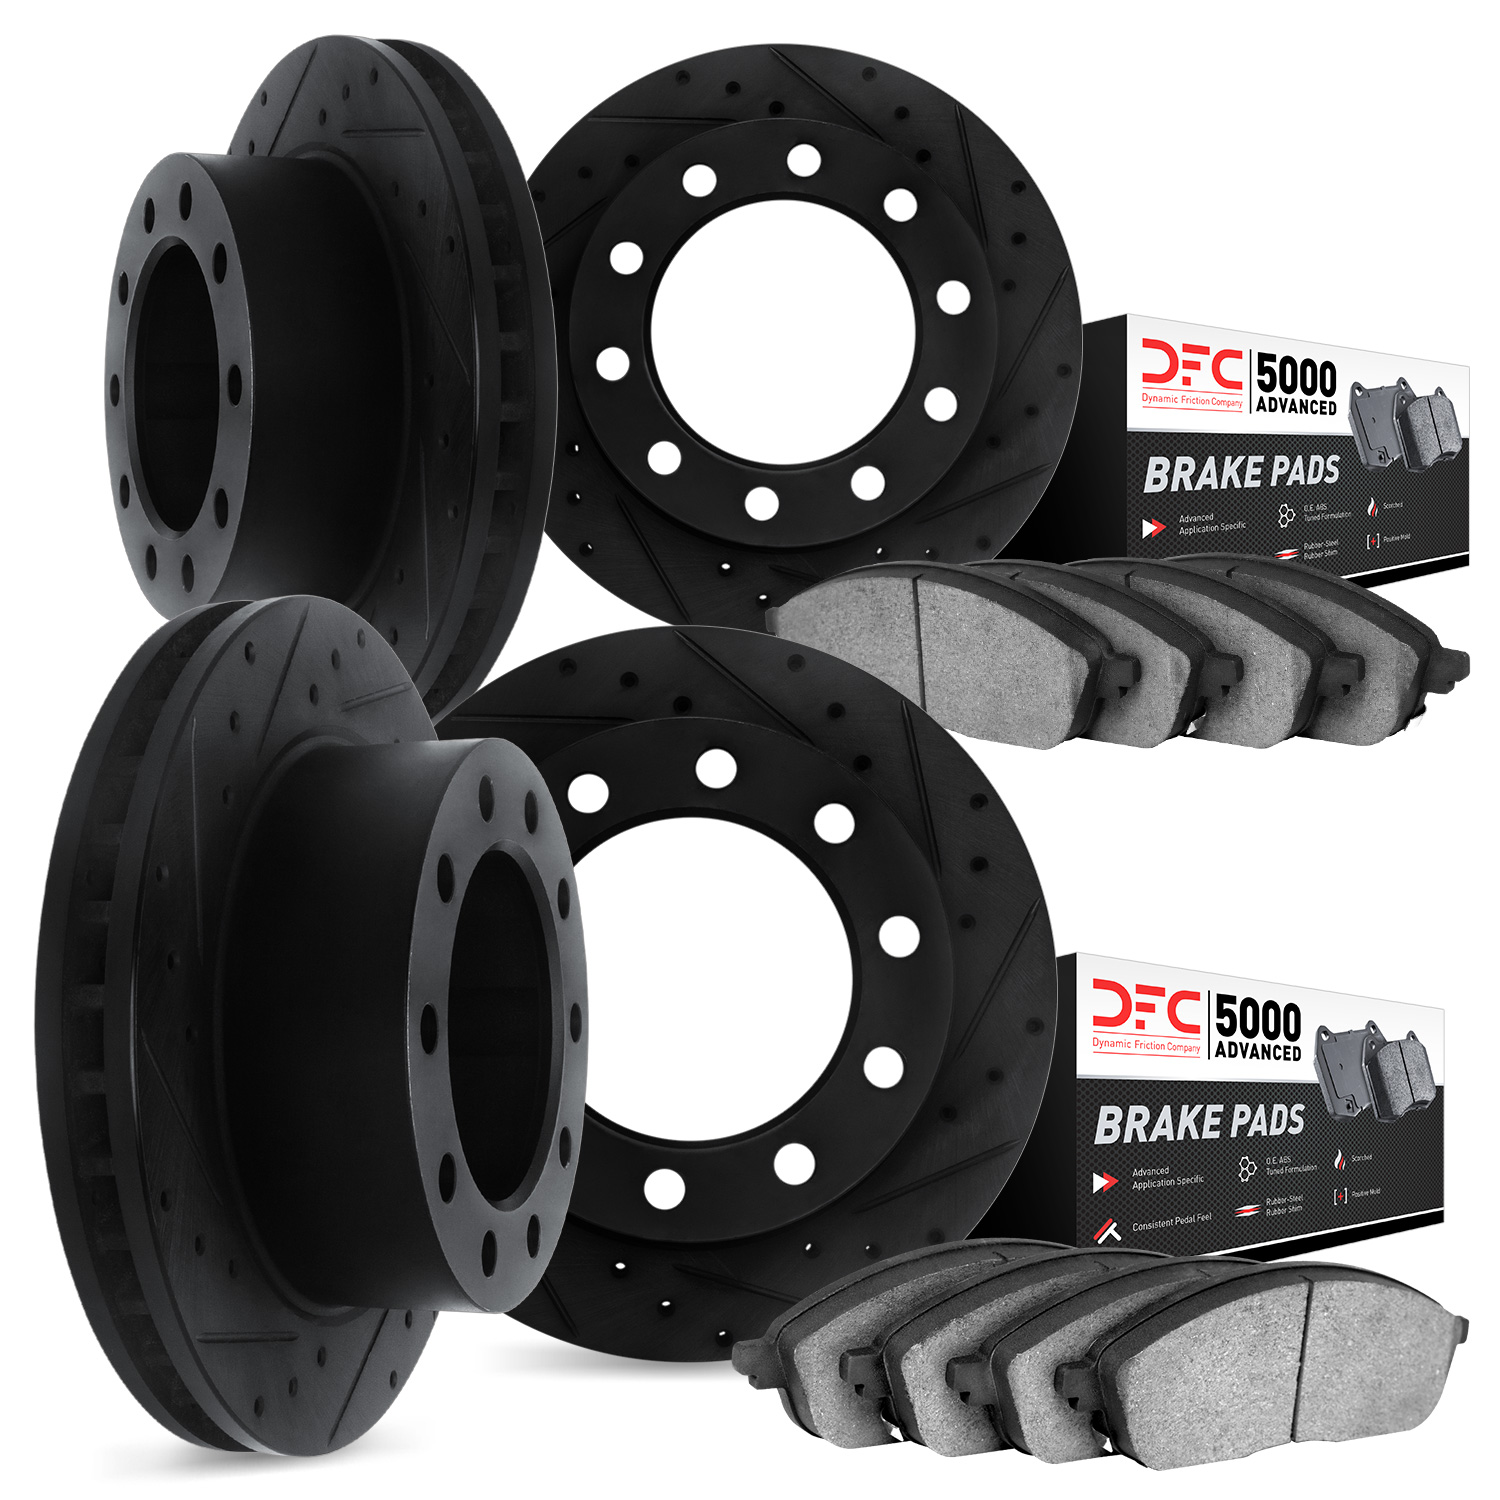 8504-40246 Drilled/Slotted Brake Rotors w/5000 Advanced Brake Pads Kit [Black], 2008-2021 Multiple Makes/Models, Position: Front